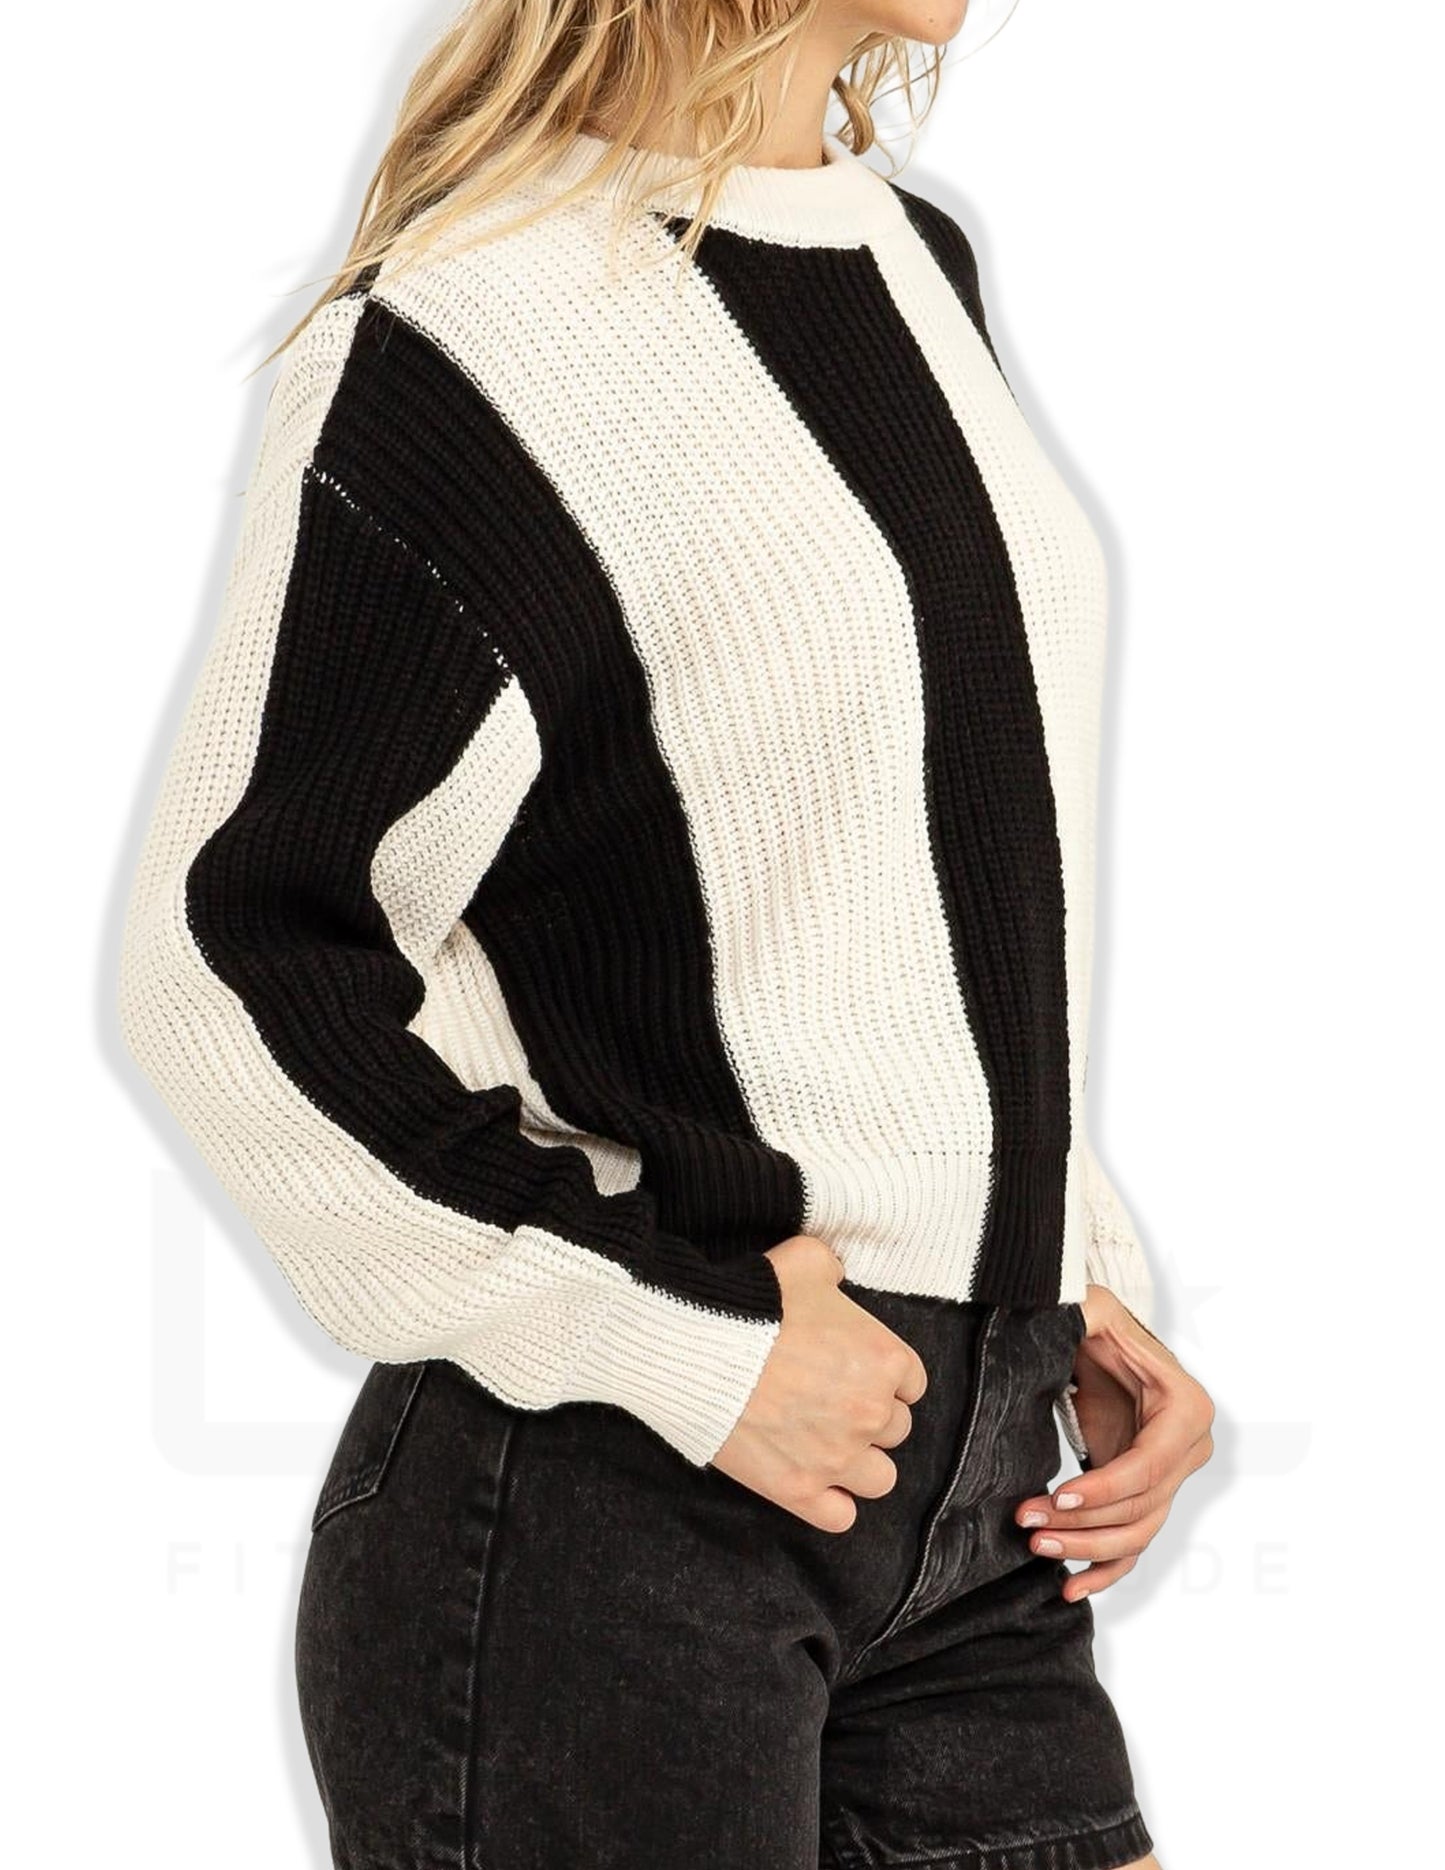 Vertical Stripe Sweater - Black and Cream